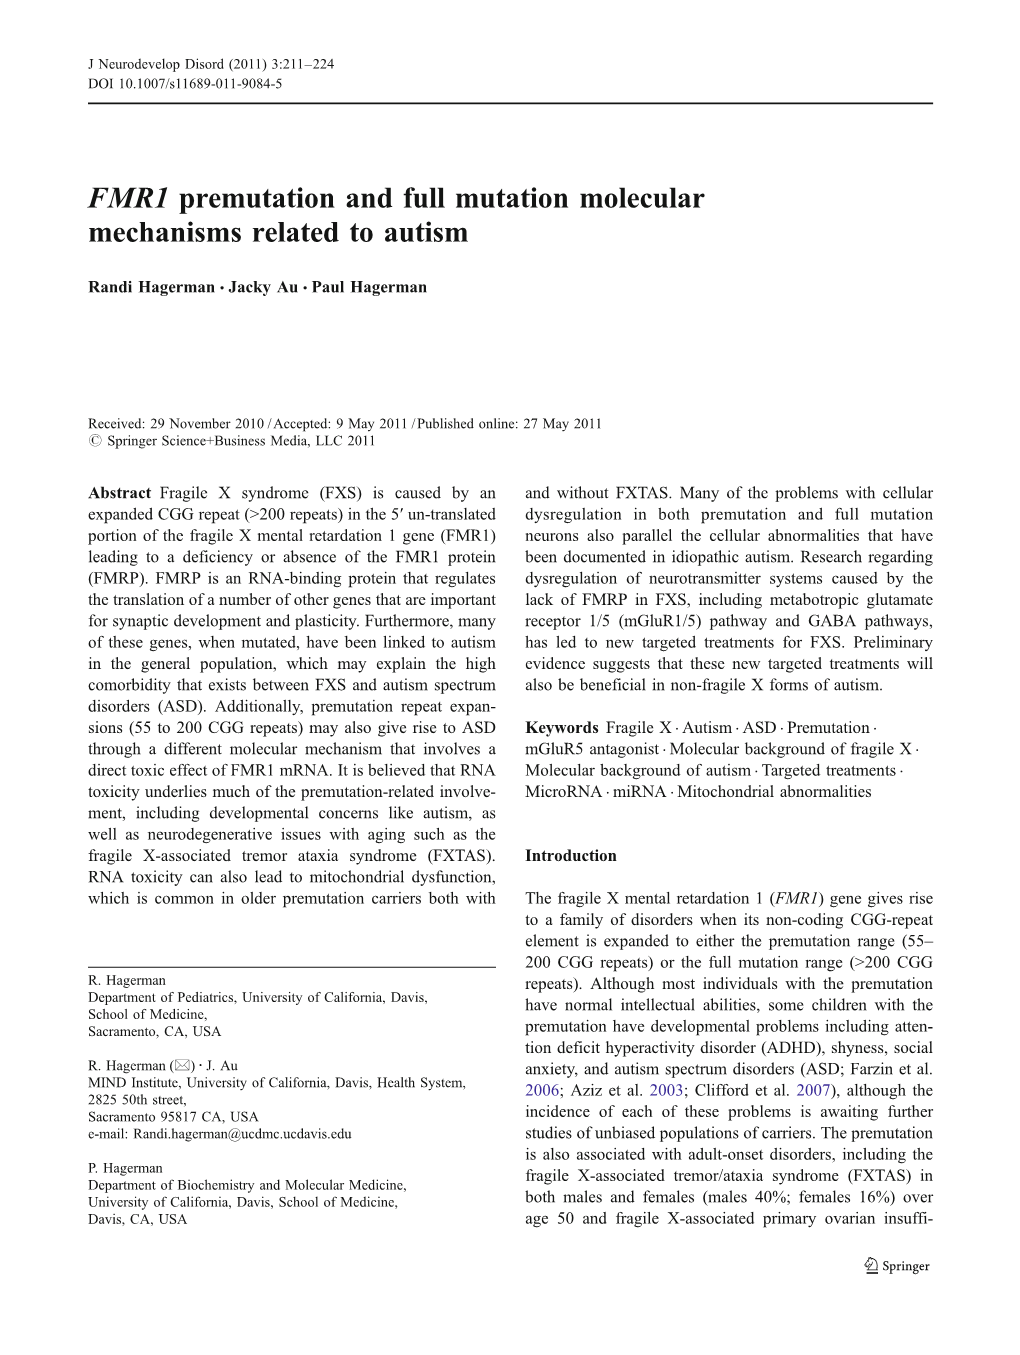 FMR1 Premutation and Full Mutation Molecular Mechanisms Related to Autism